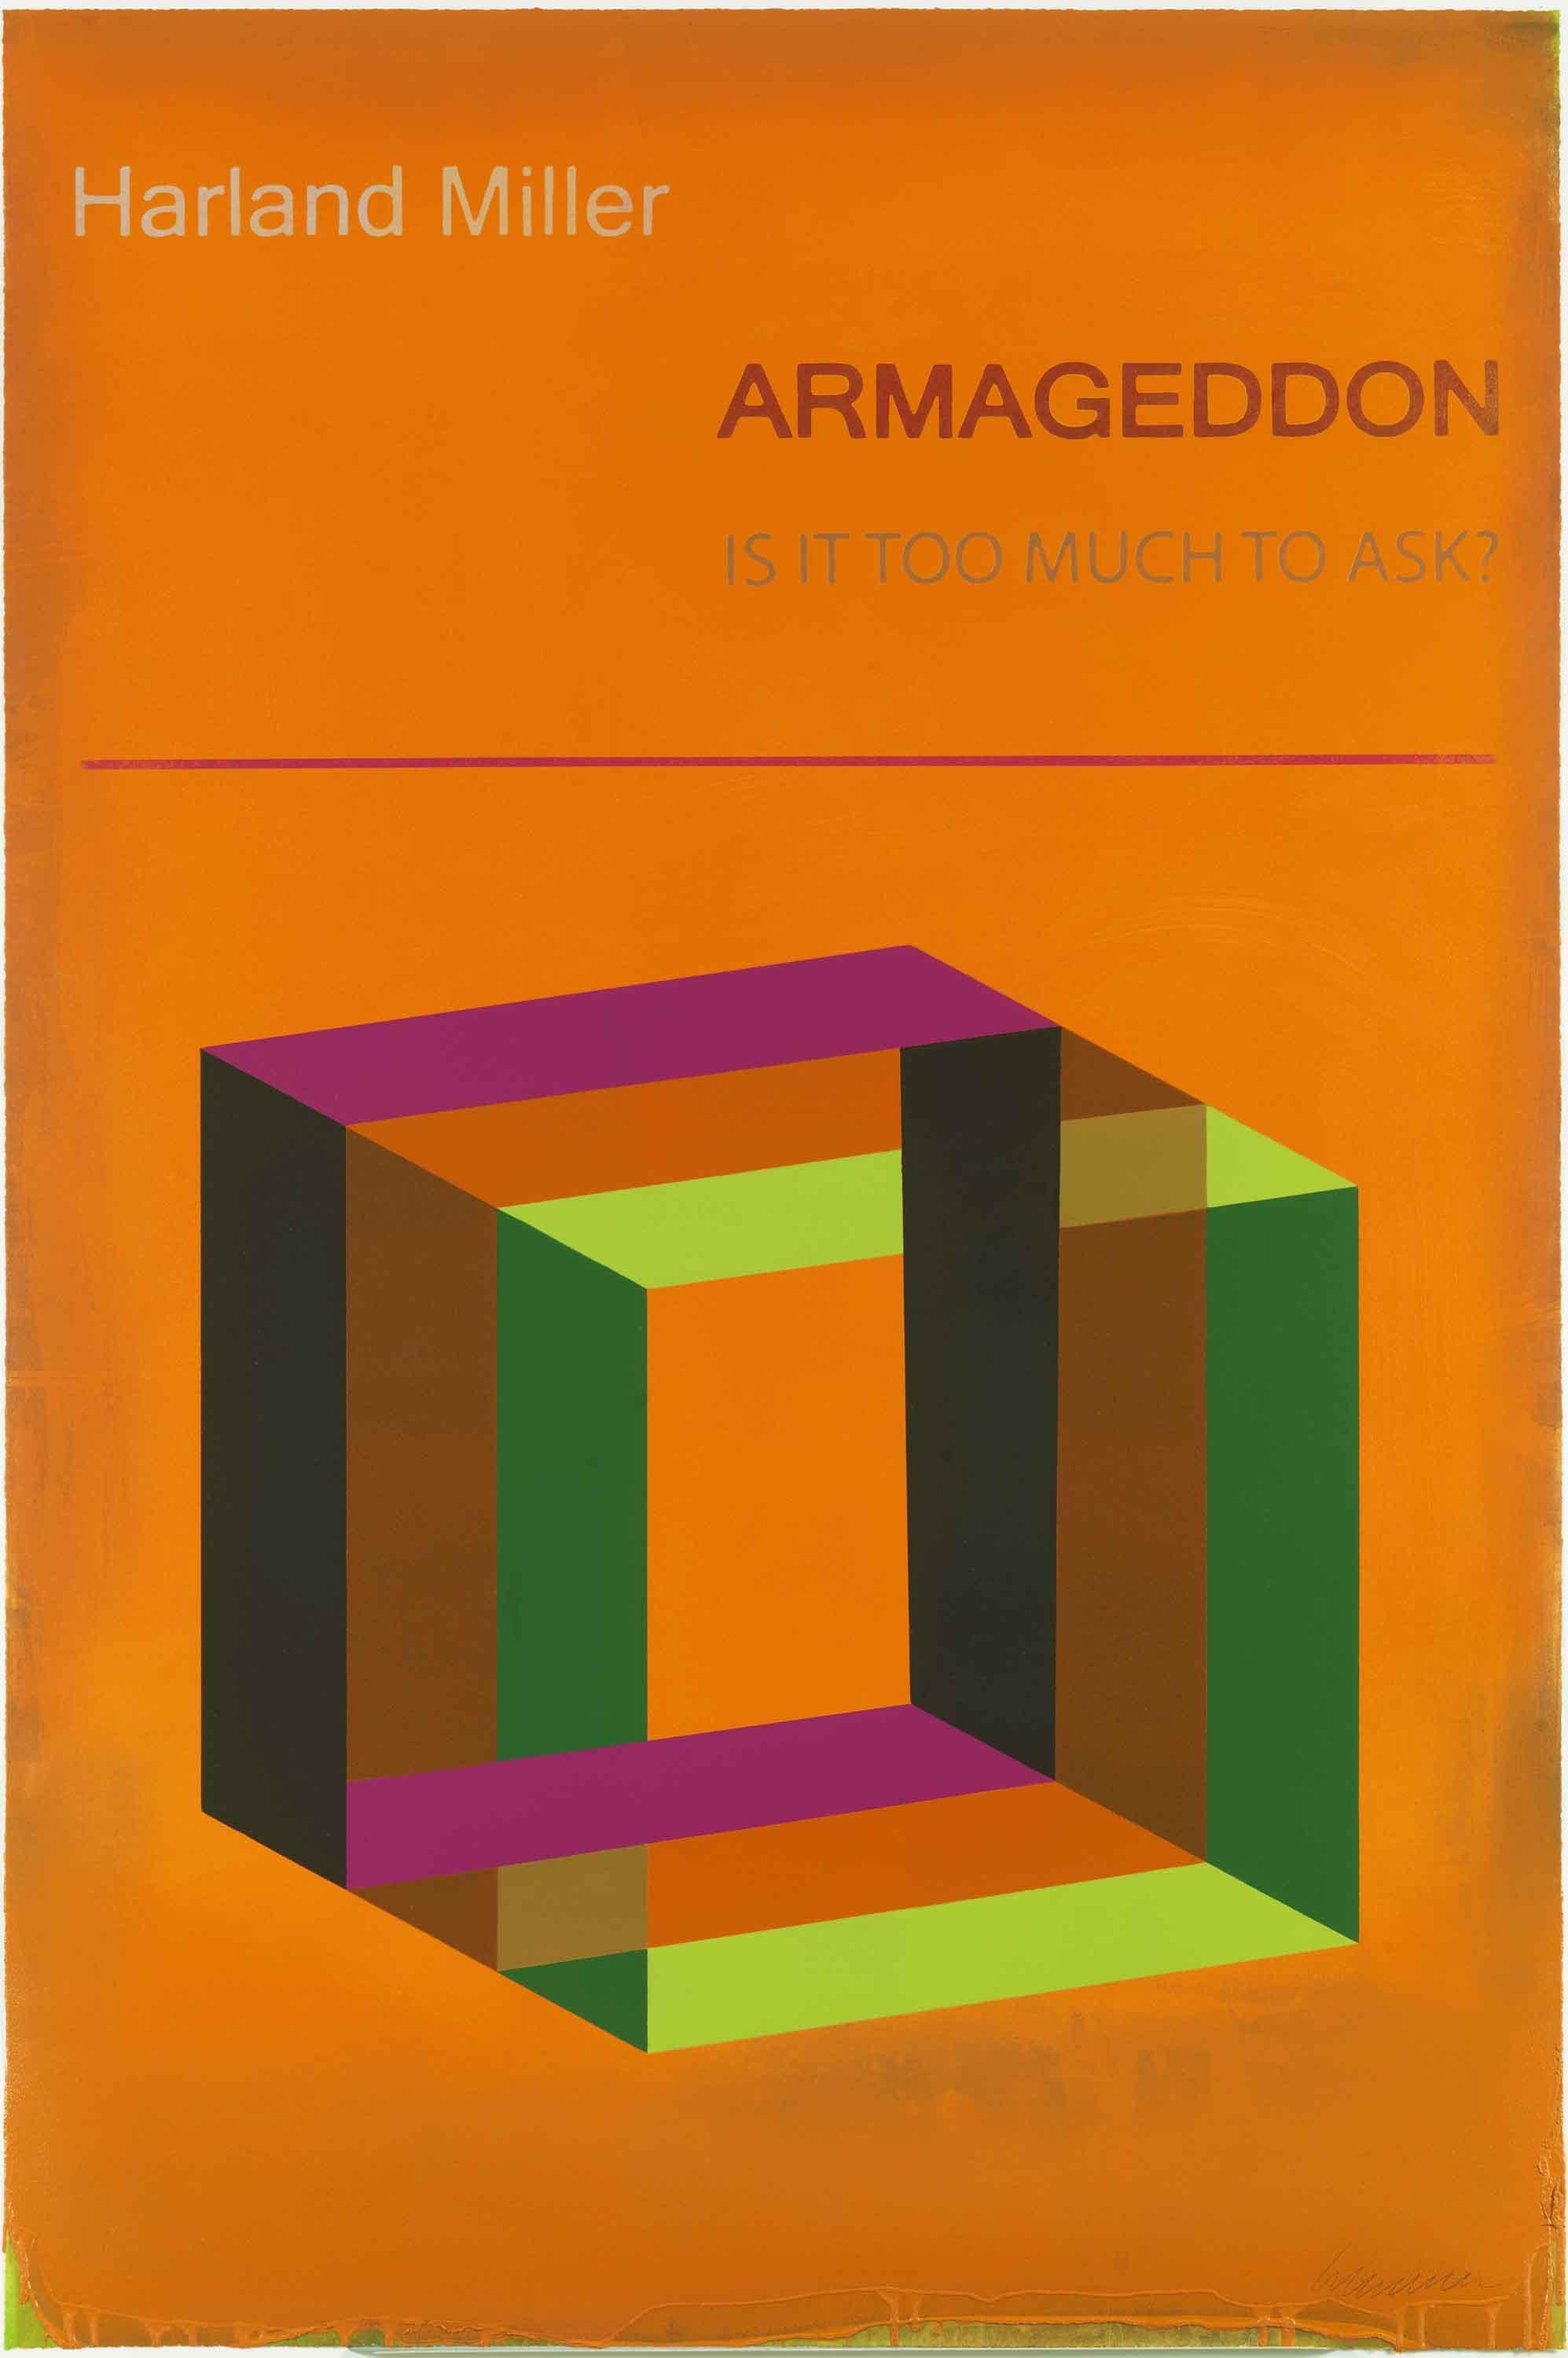 Armageddon - Print by Harland Miller